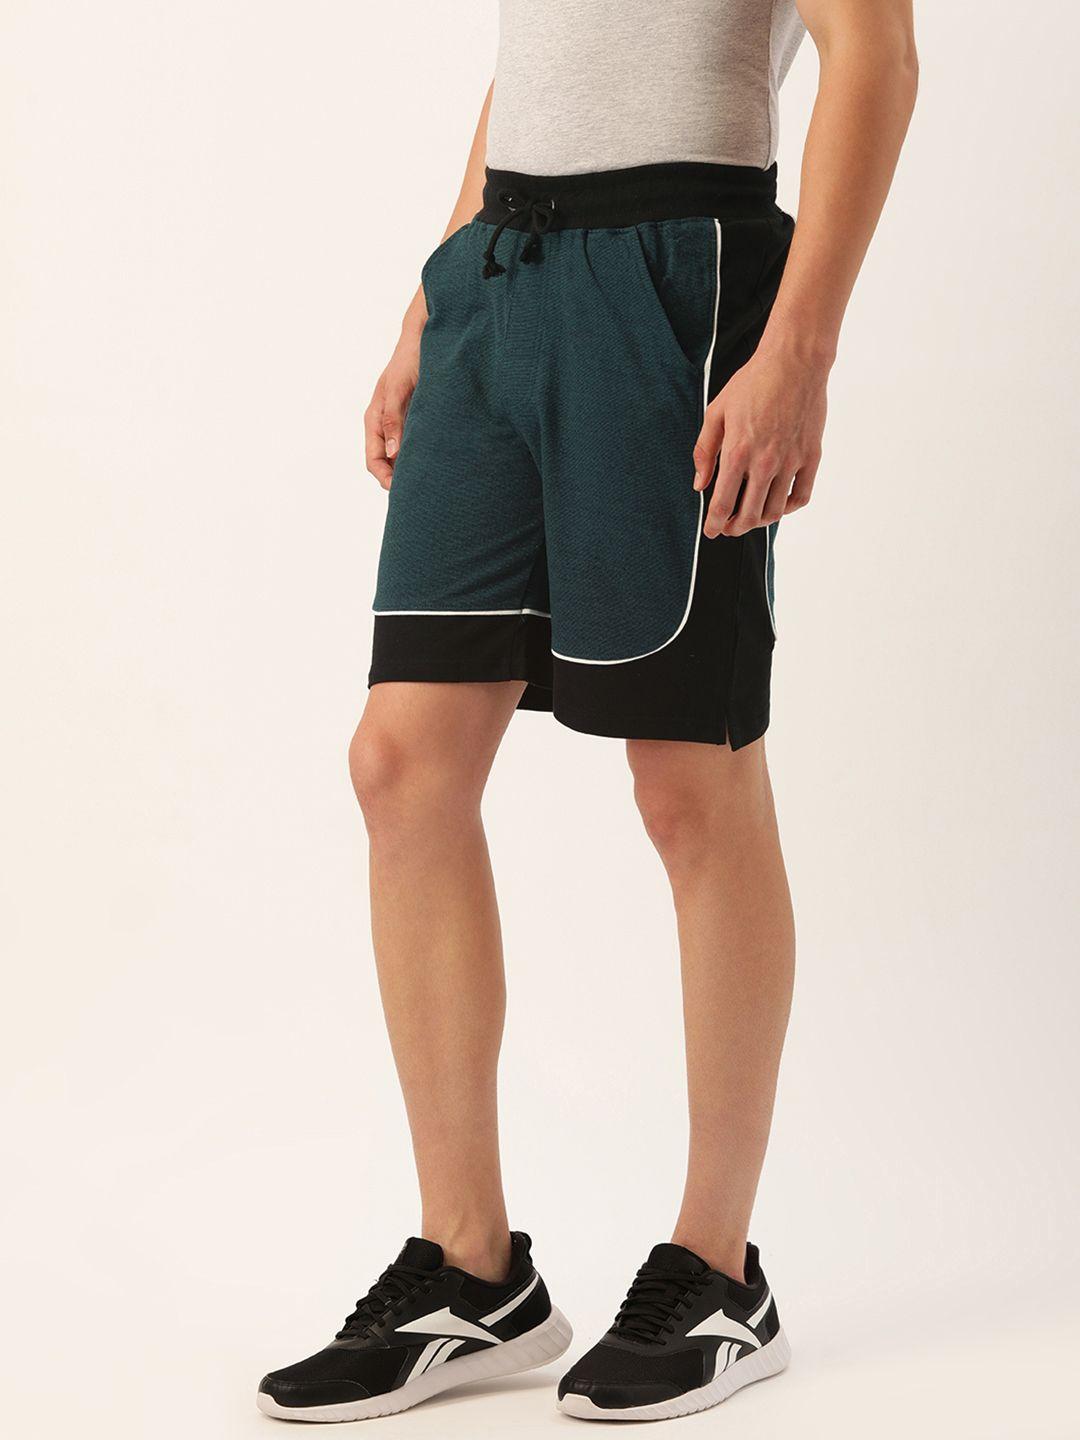 arise-men-teal-green-&-black-colourblocked-shorts